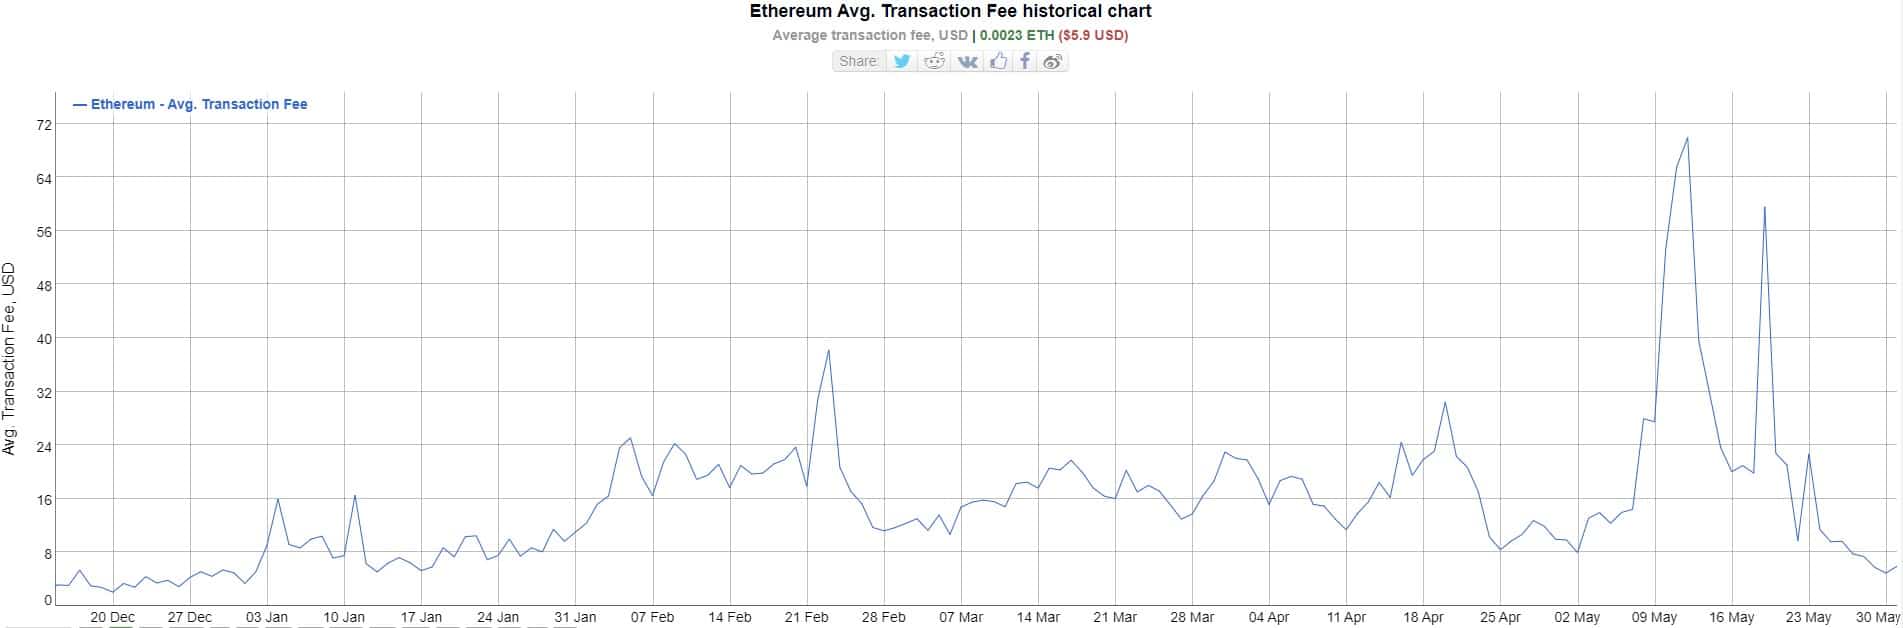 Average Transaction Fees on Ethereum. Source: BitInfoCharts